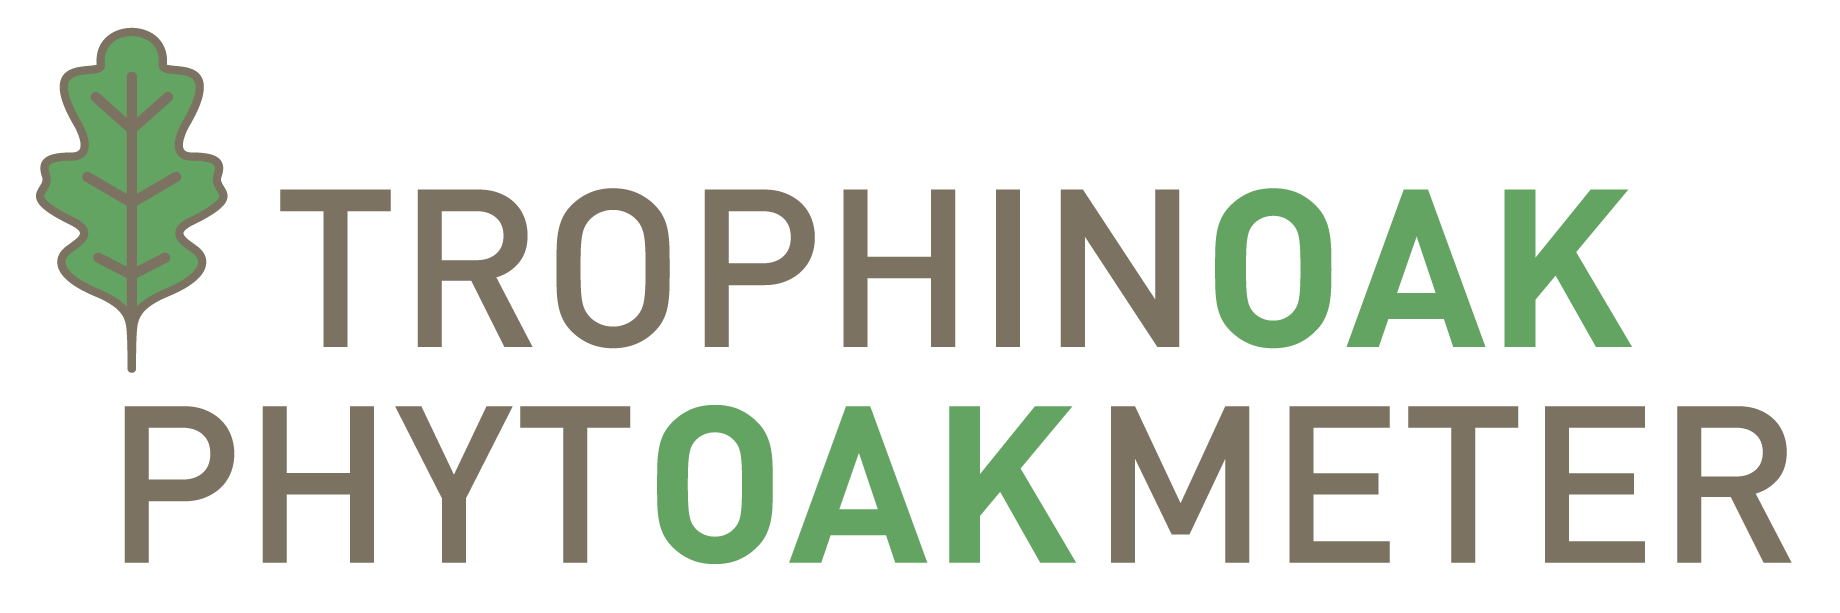 Logo TrophinOak and PhytOakmeter